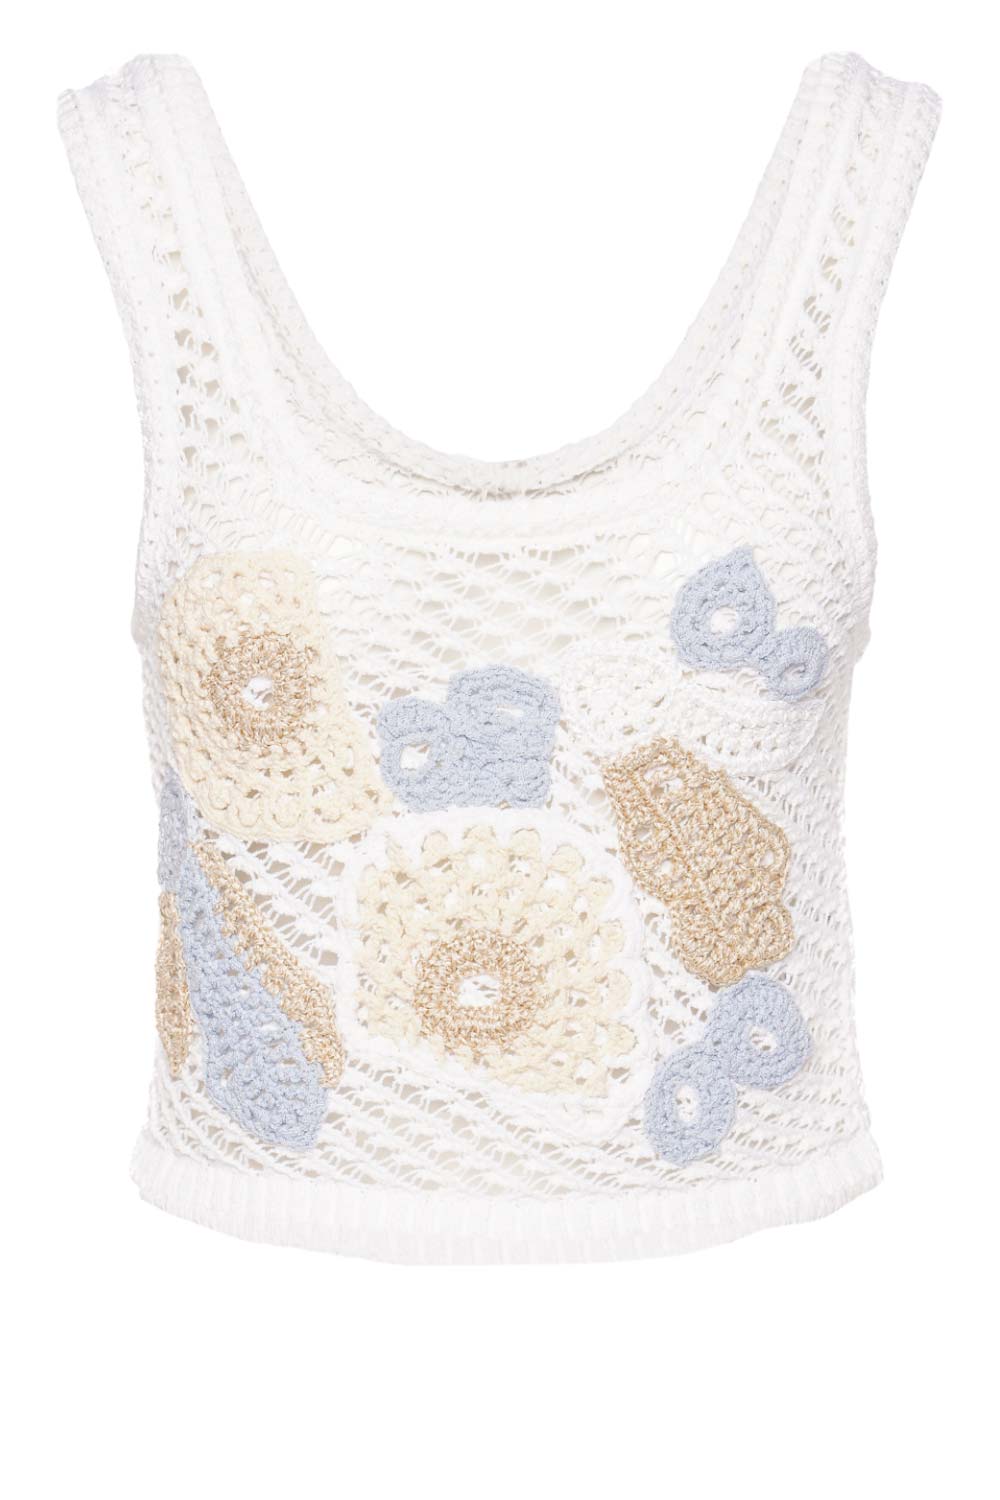 SIMKHAI Vail Blue Haze Floral Crochet Tank